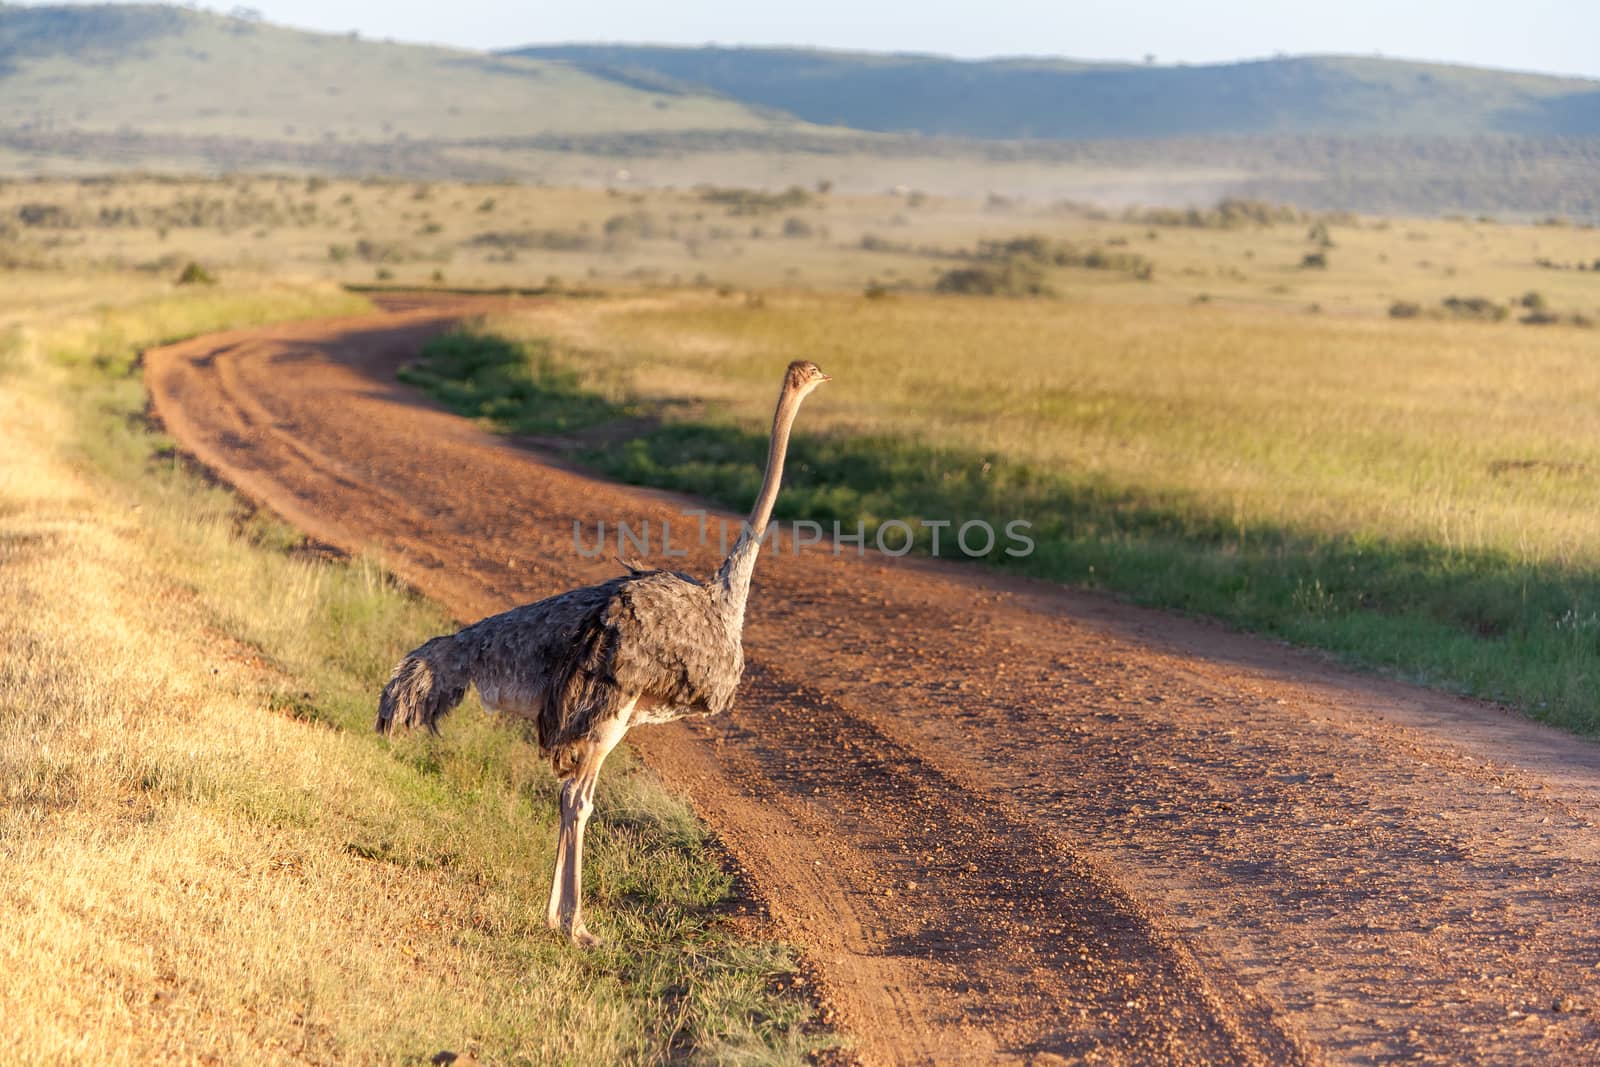 Ostrich  walking on savanna in Africa. Safari. Kenya by master1305